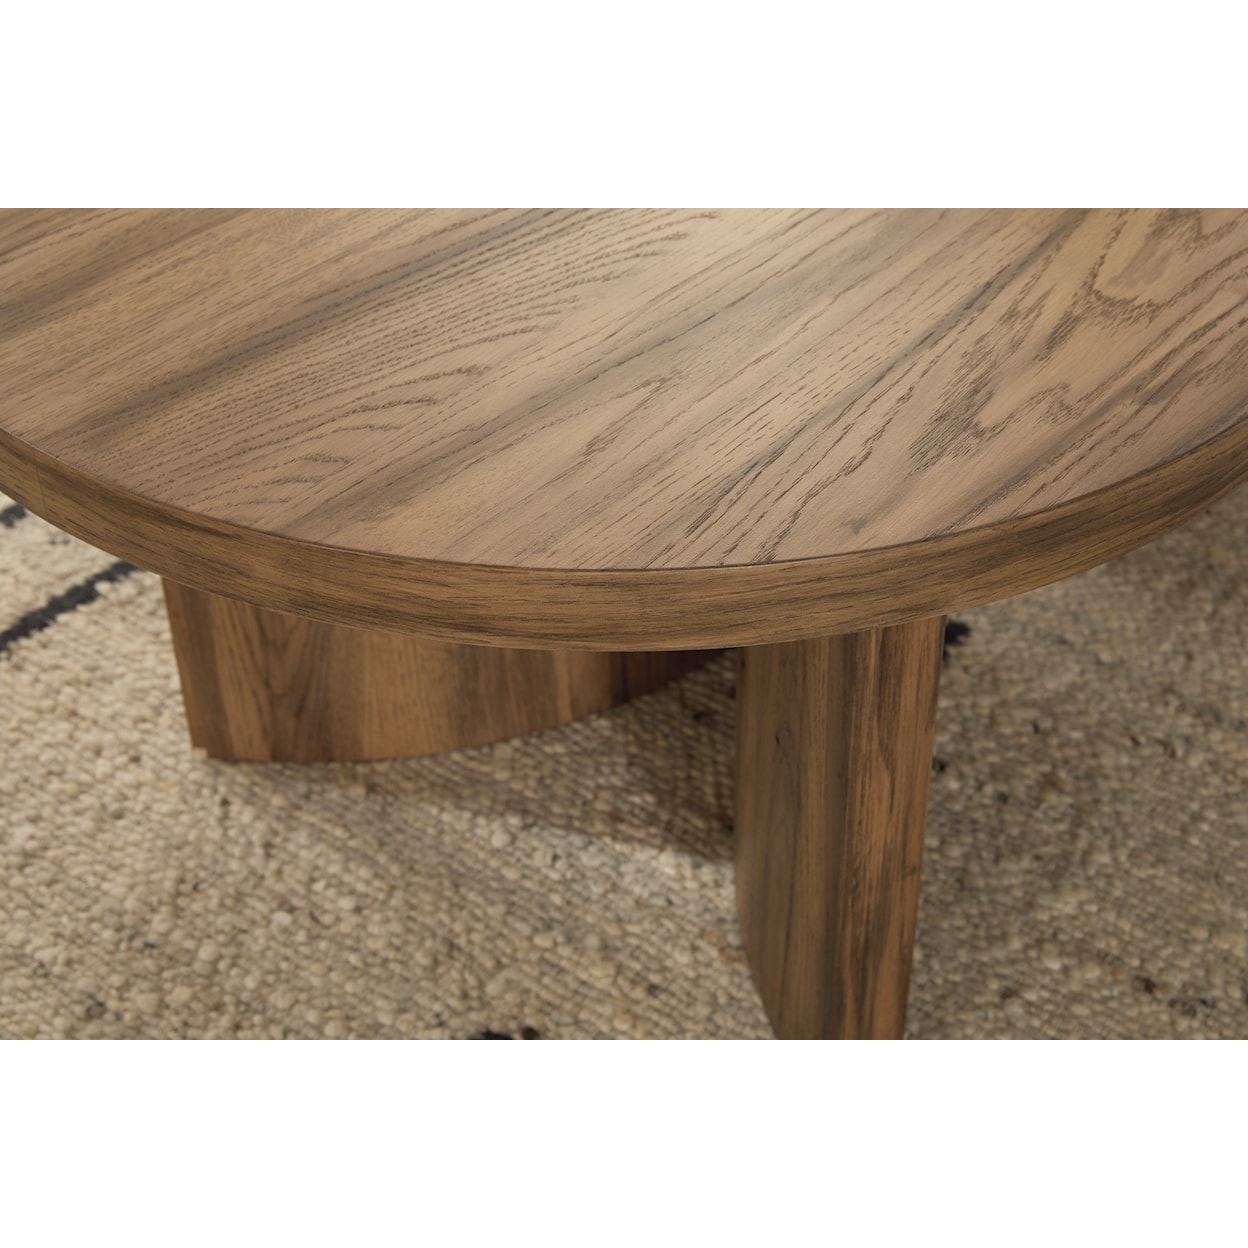 Signature Austanny Oval Coffee Table